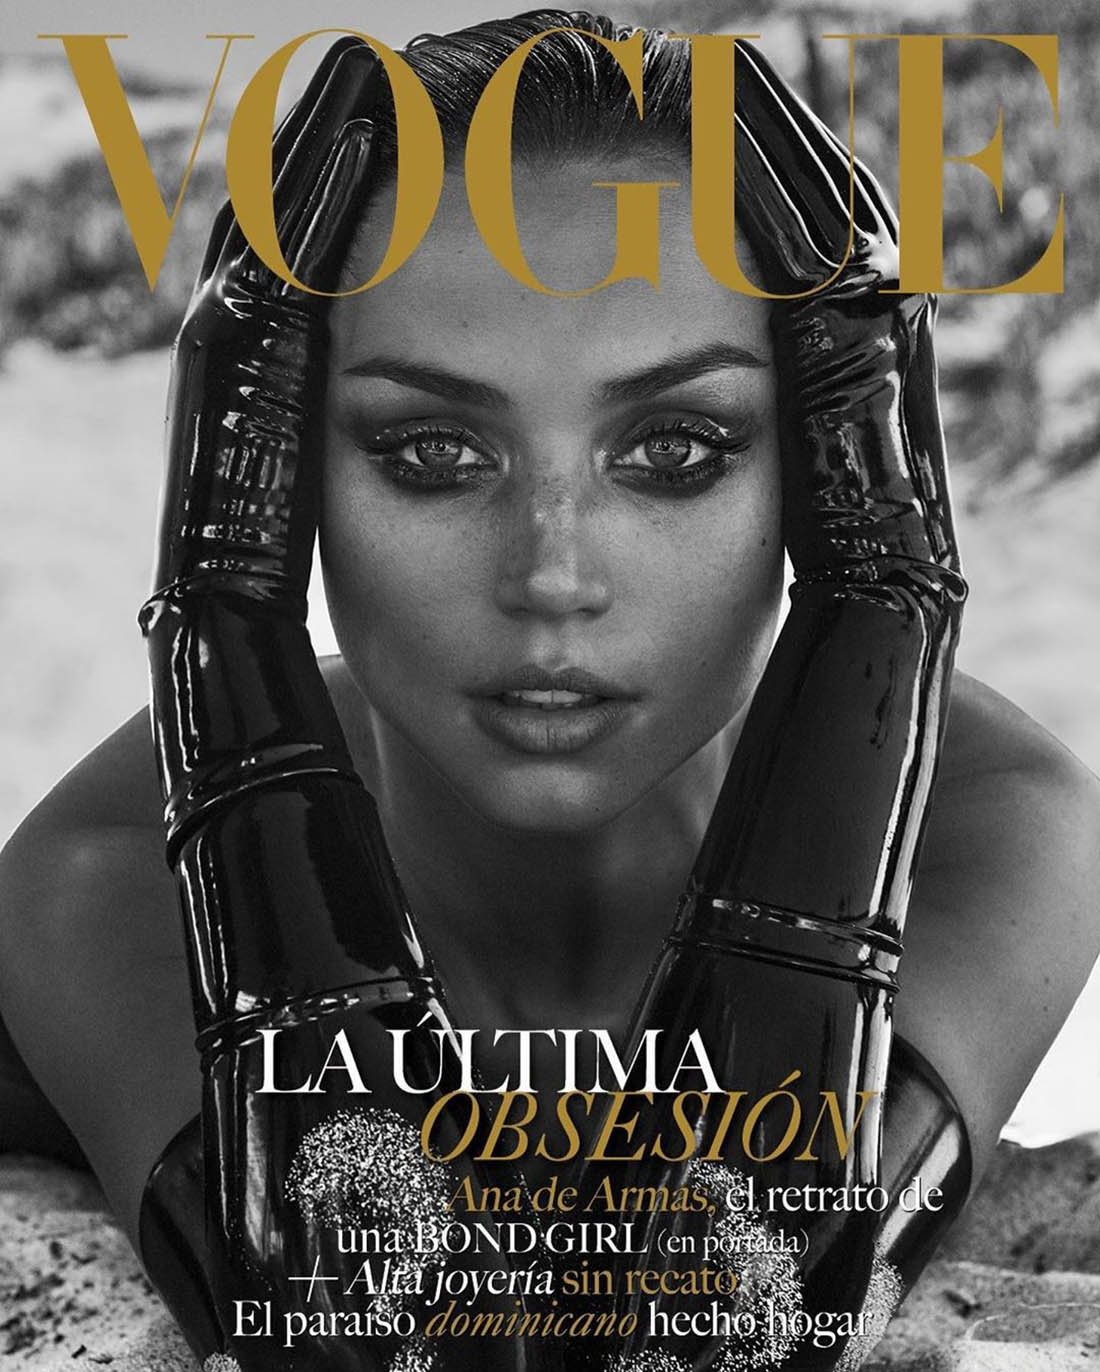 Ana de Armas covers Vogue Mexico & Latin America October 2020 by Alique